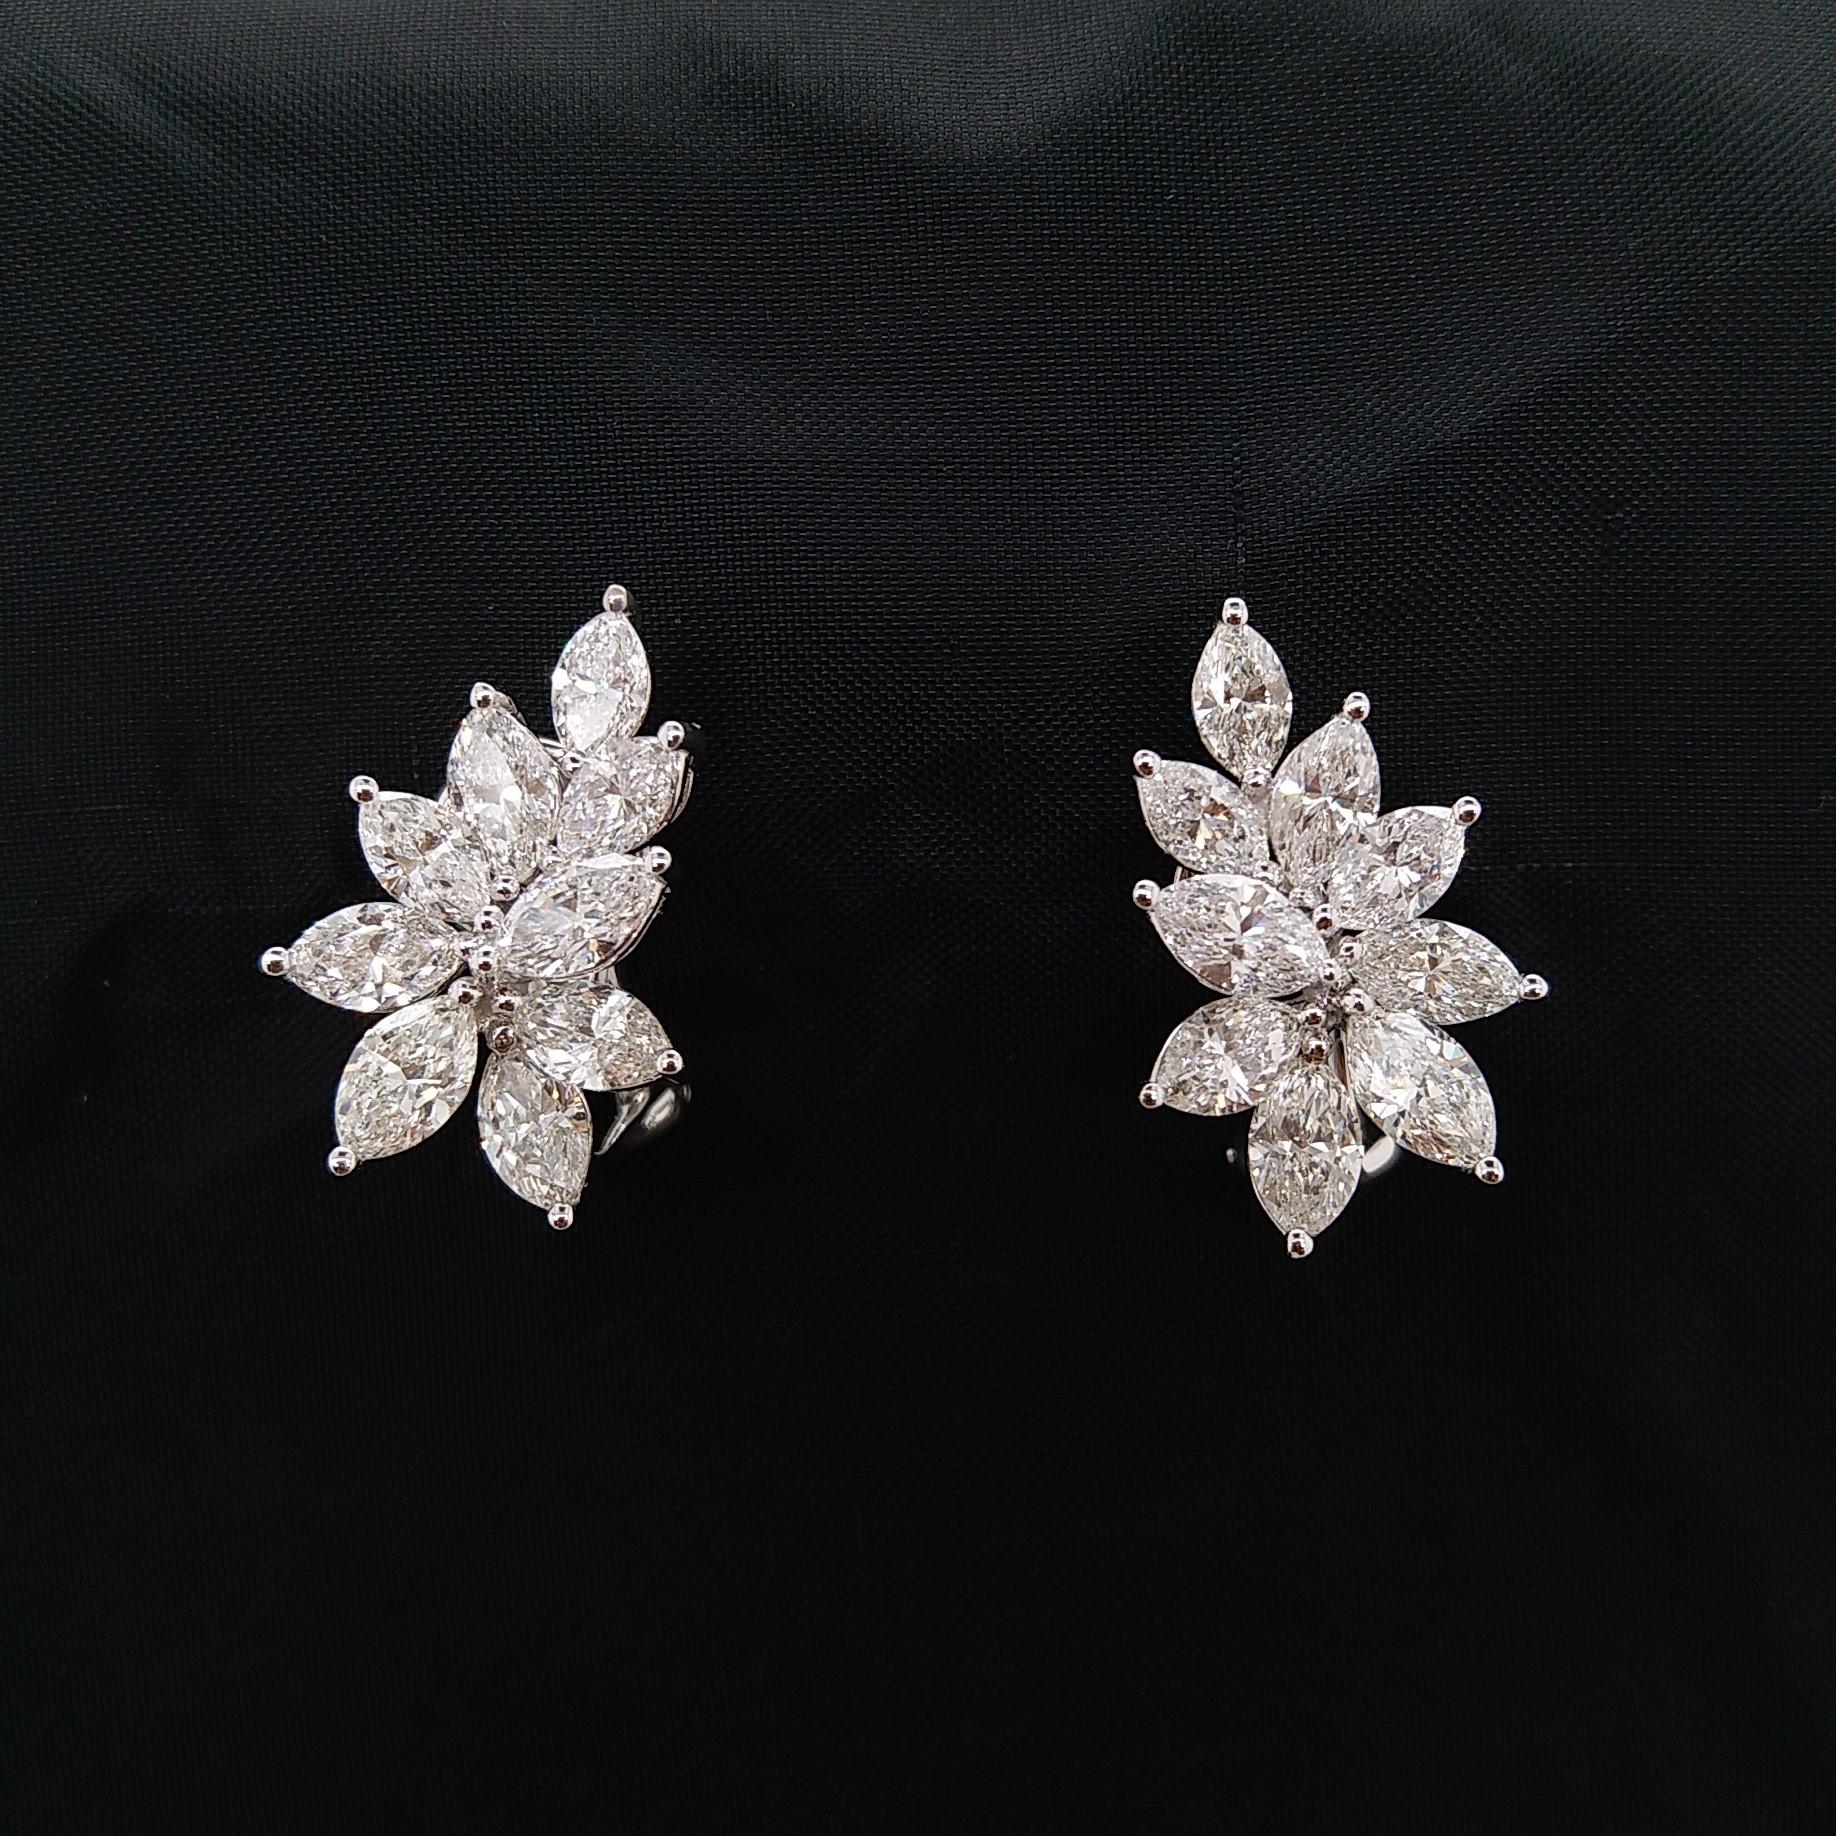 Marquise Cut Natural White Diamonds in 18 Karat White Gold Earrings